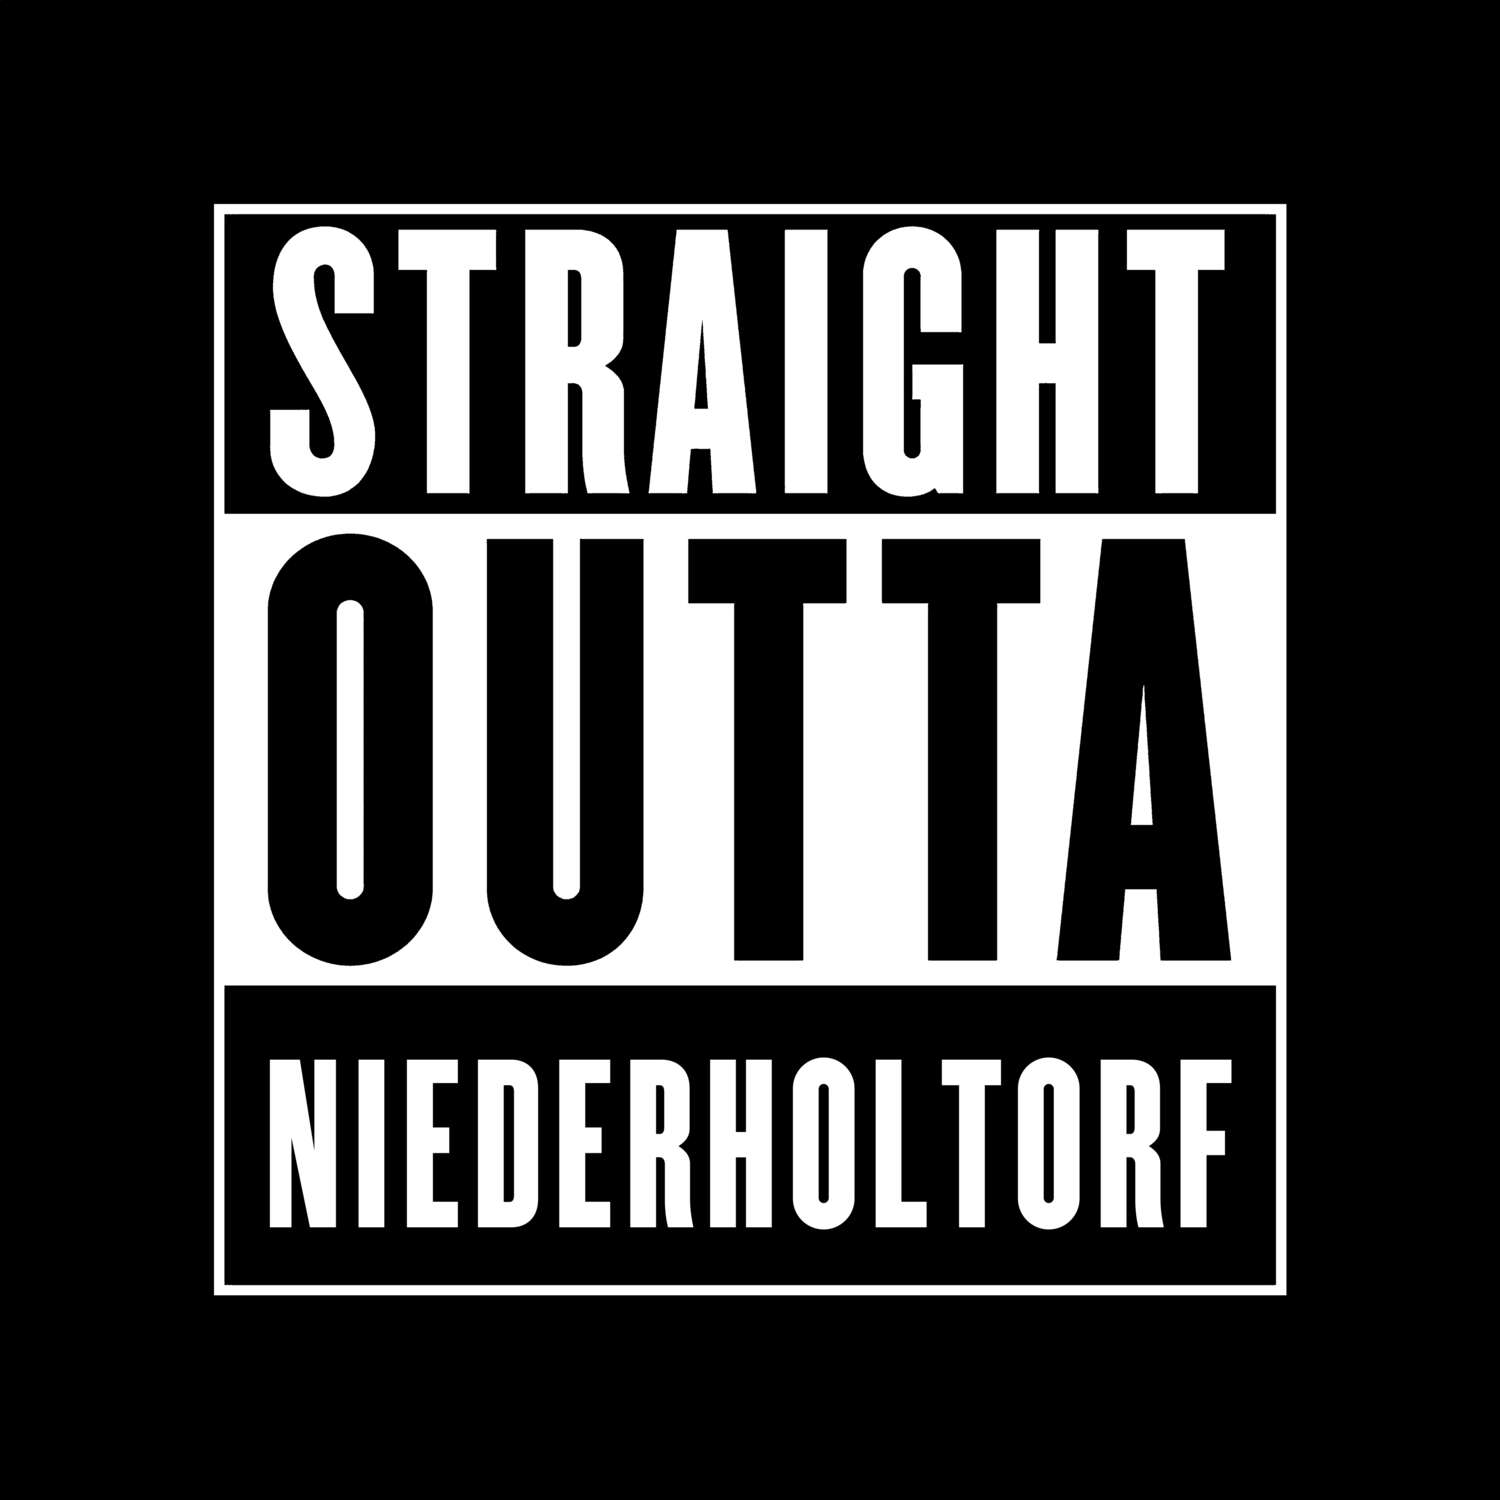 Niederholtorf T-Shirt »Straight Outta«